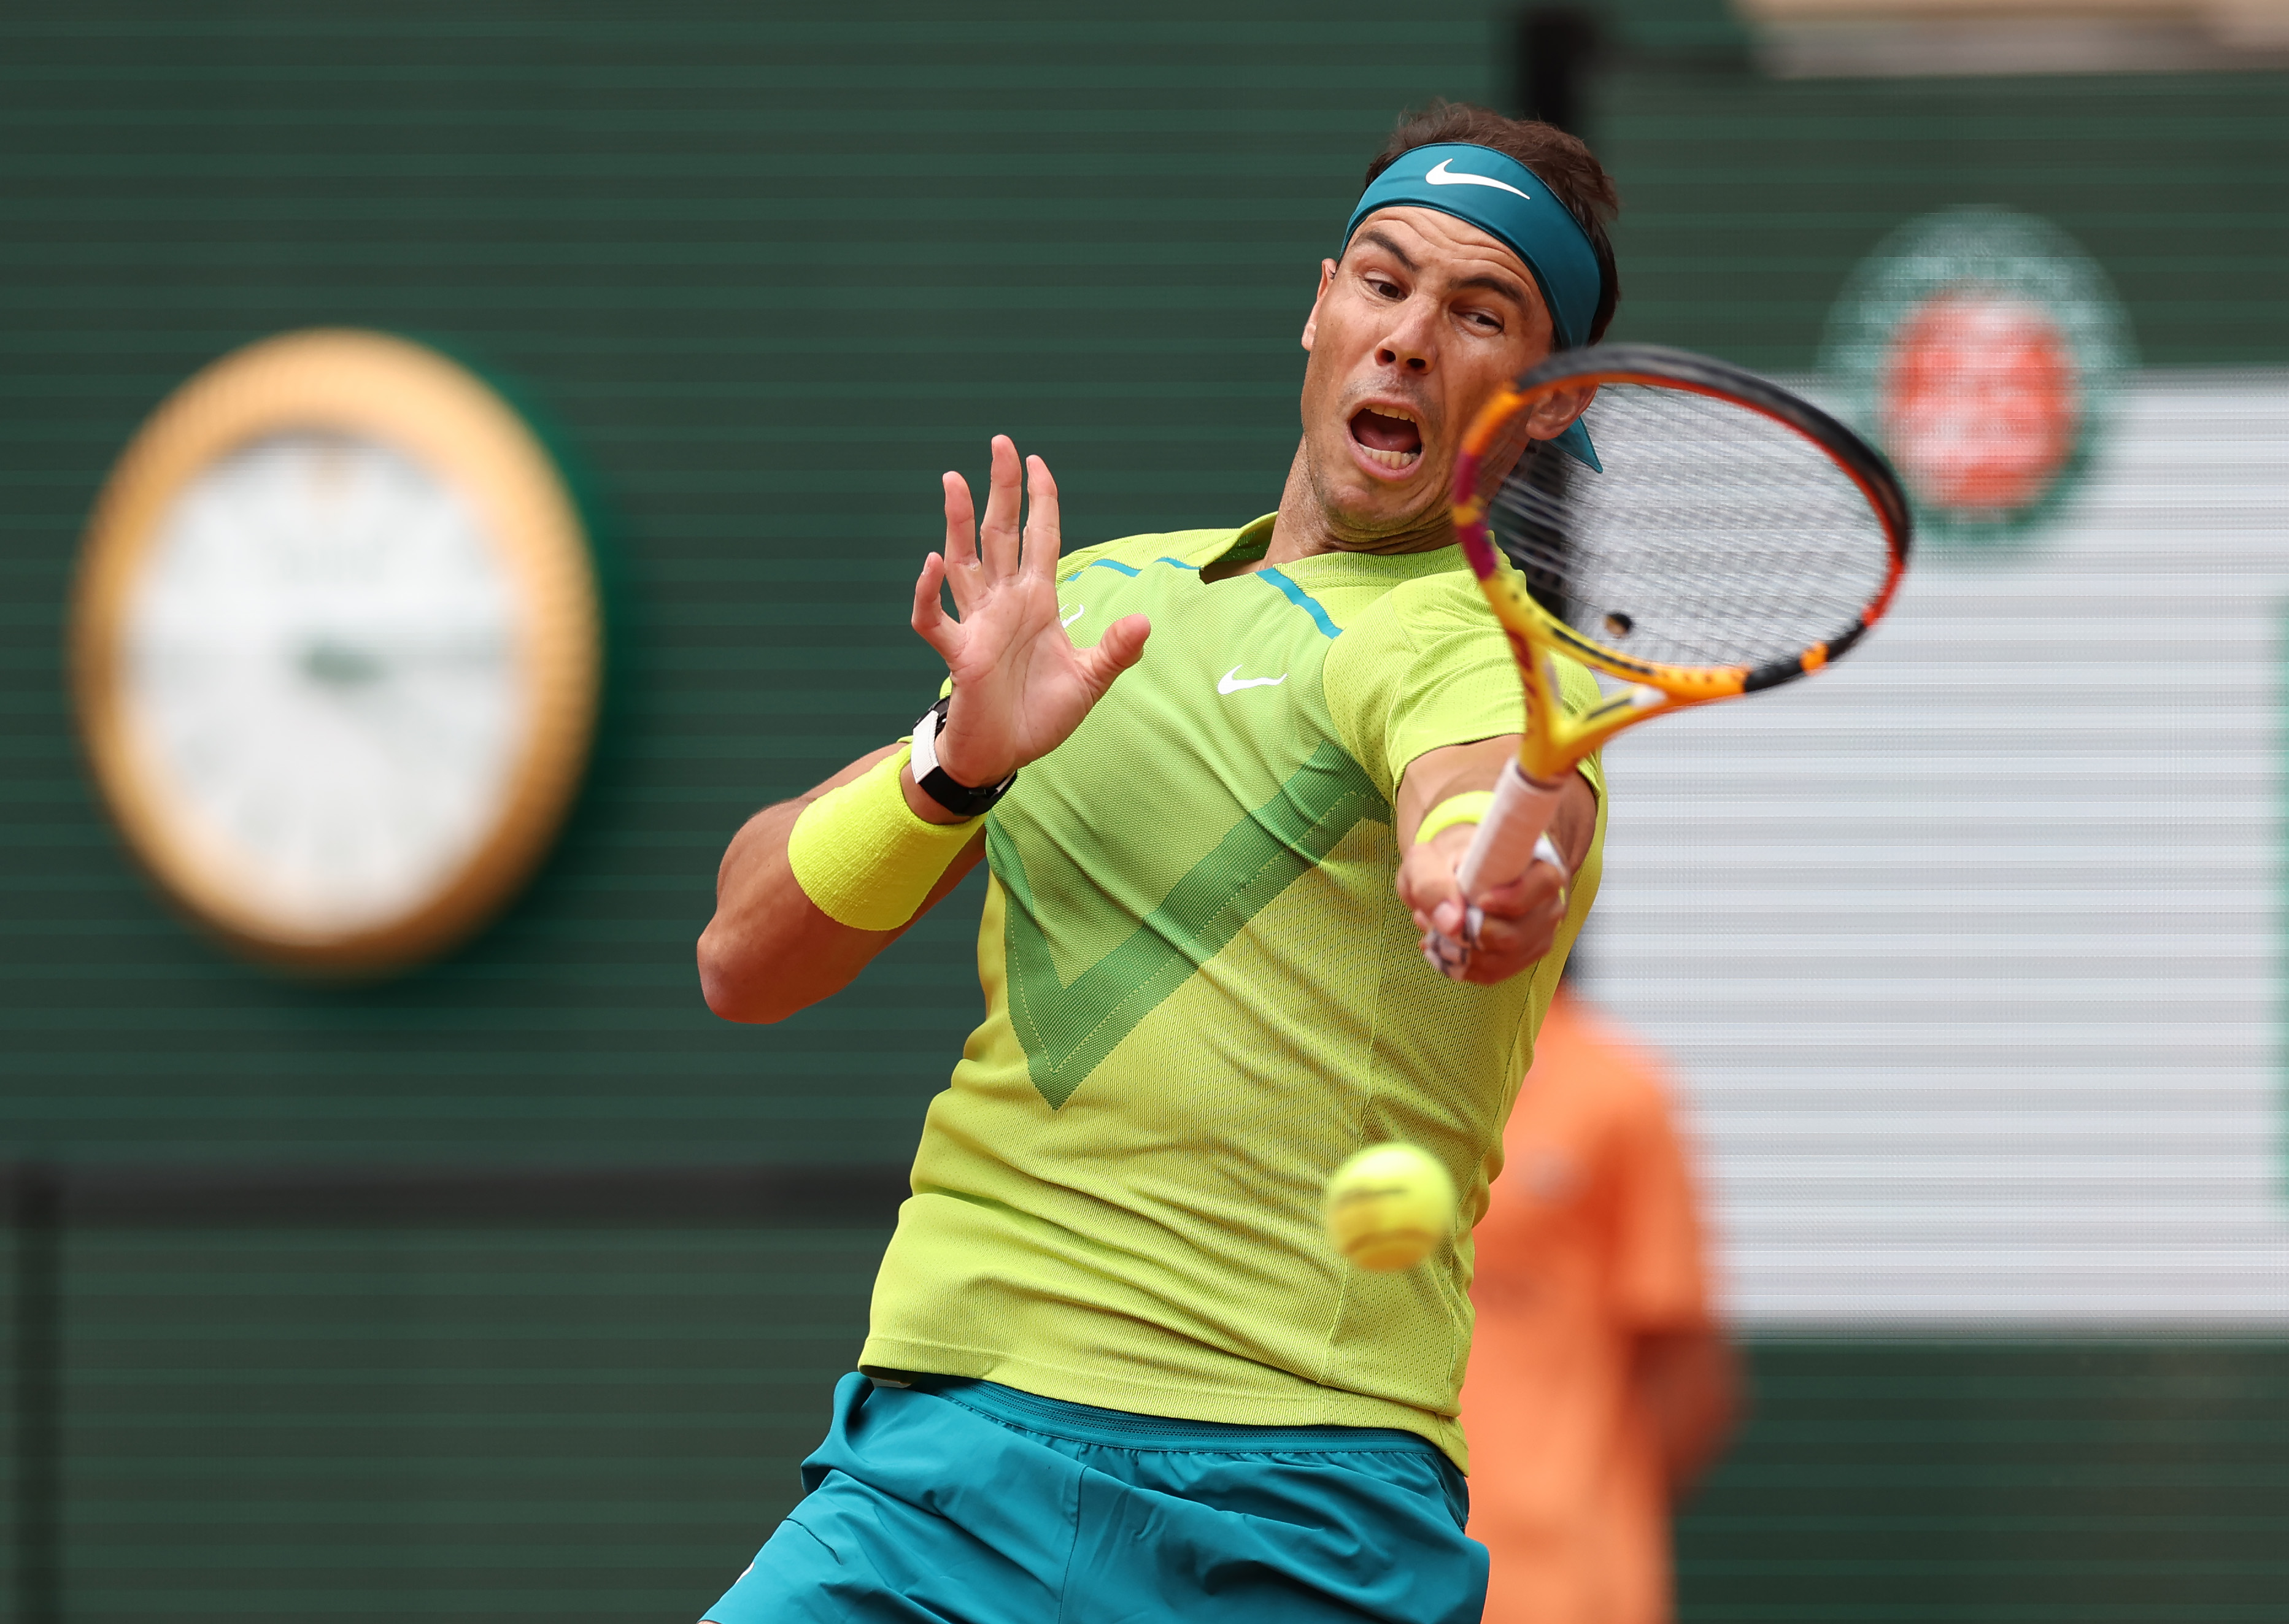 French Open 2022 Results: Novak Djokovic, Rafael Nadal Cruise to Wins on Monday